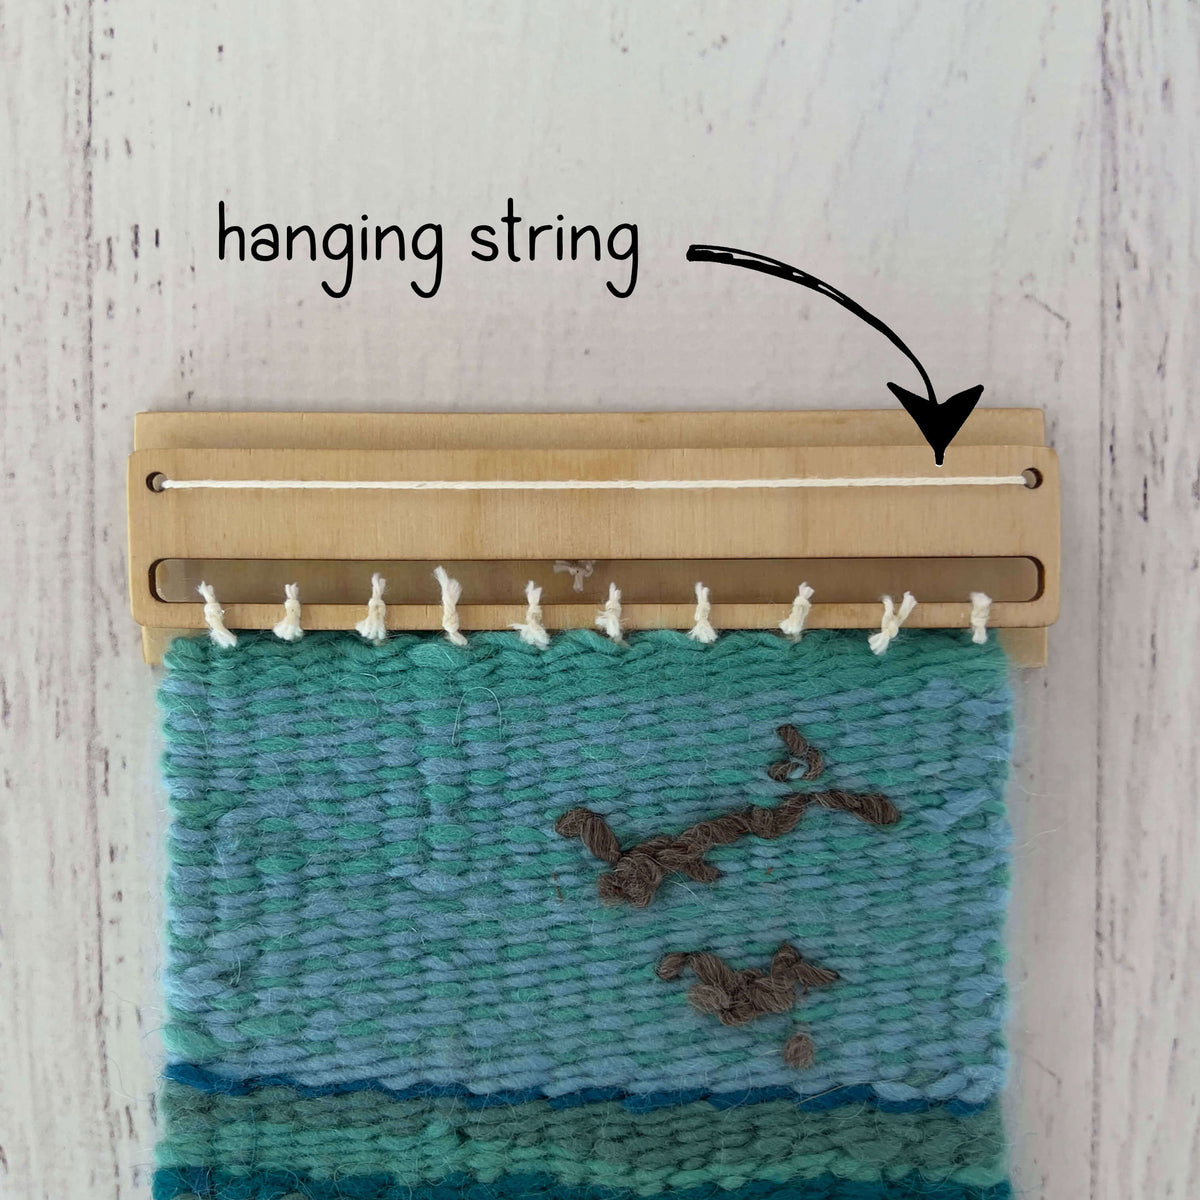 Wood Hanger - Hidden Hanging String - 9.25 Inches Wide